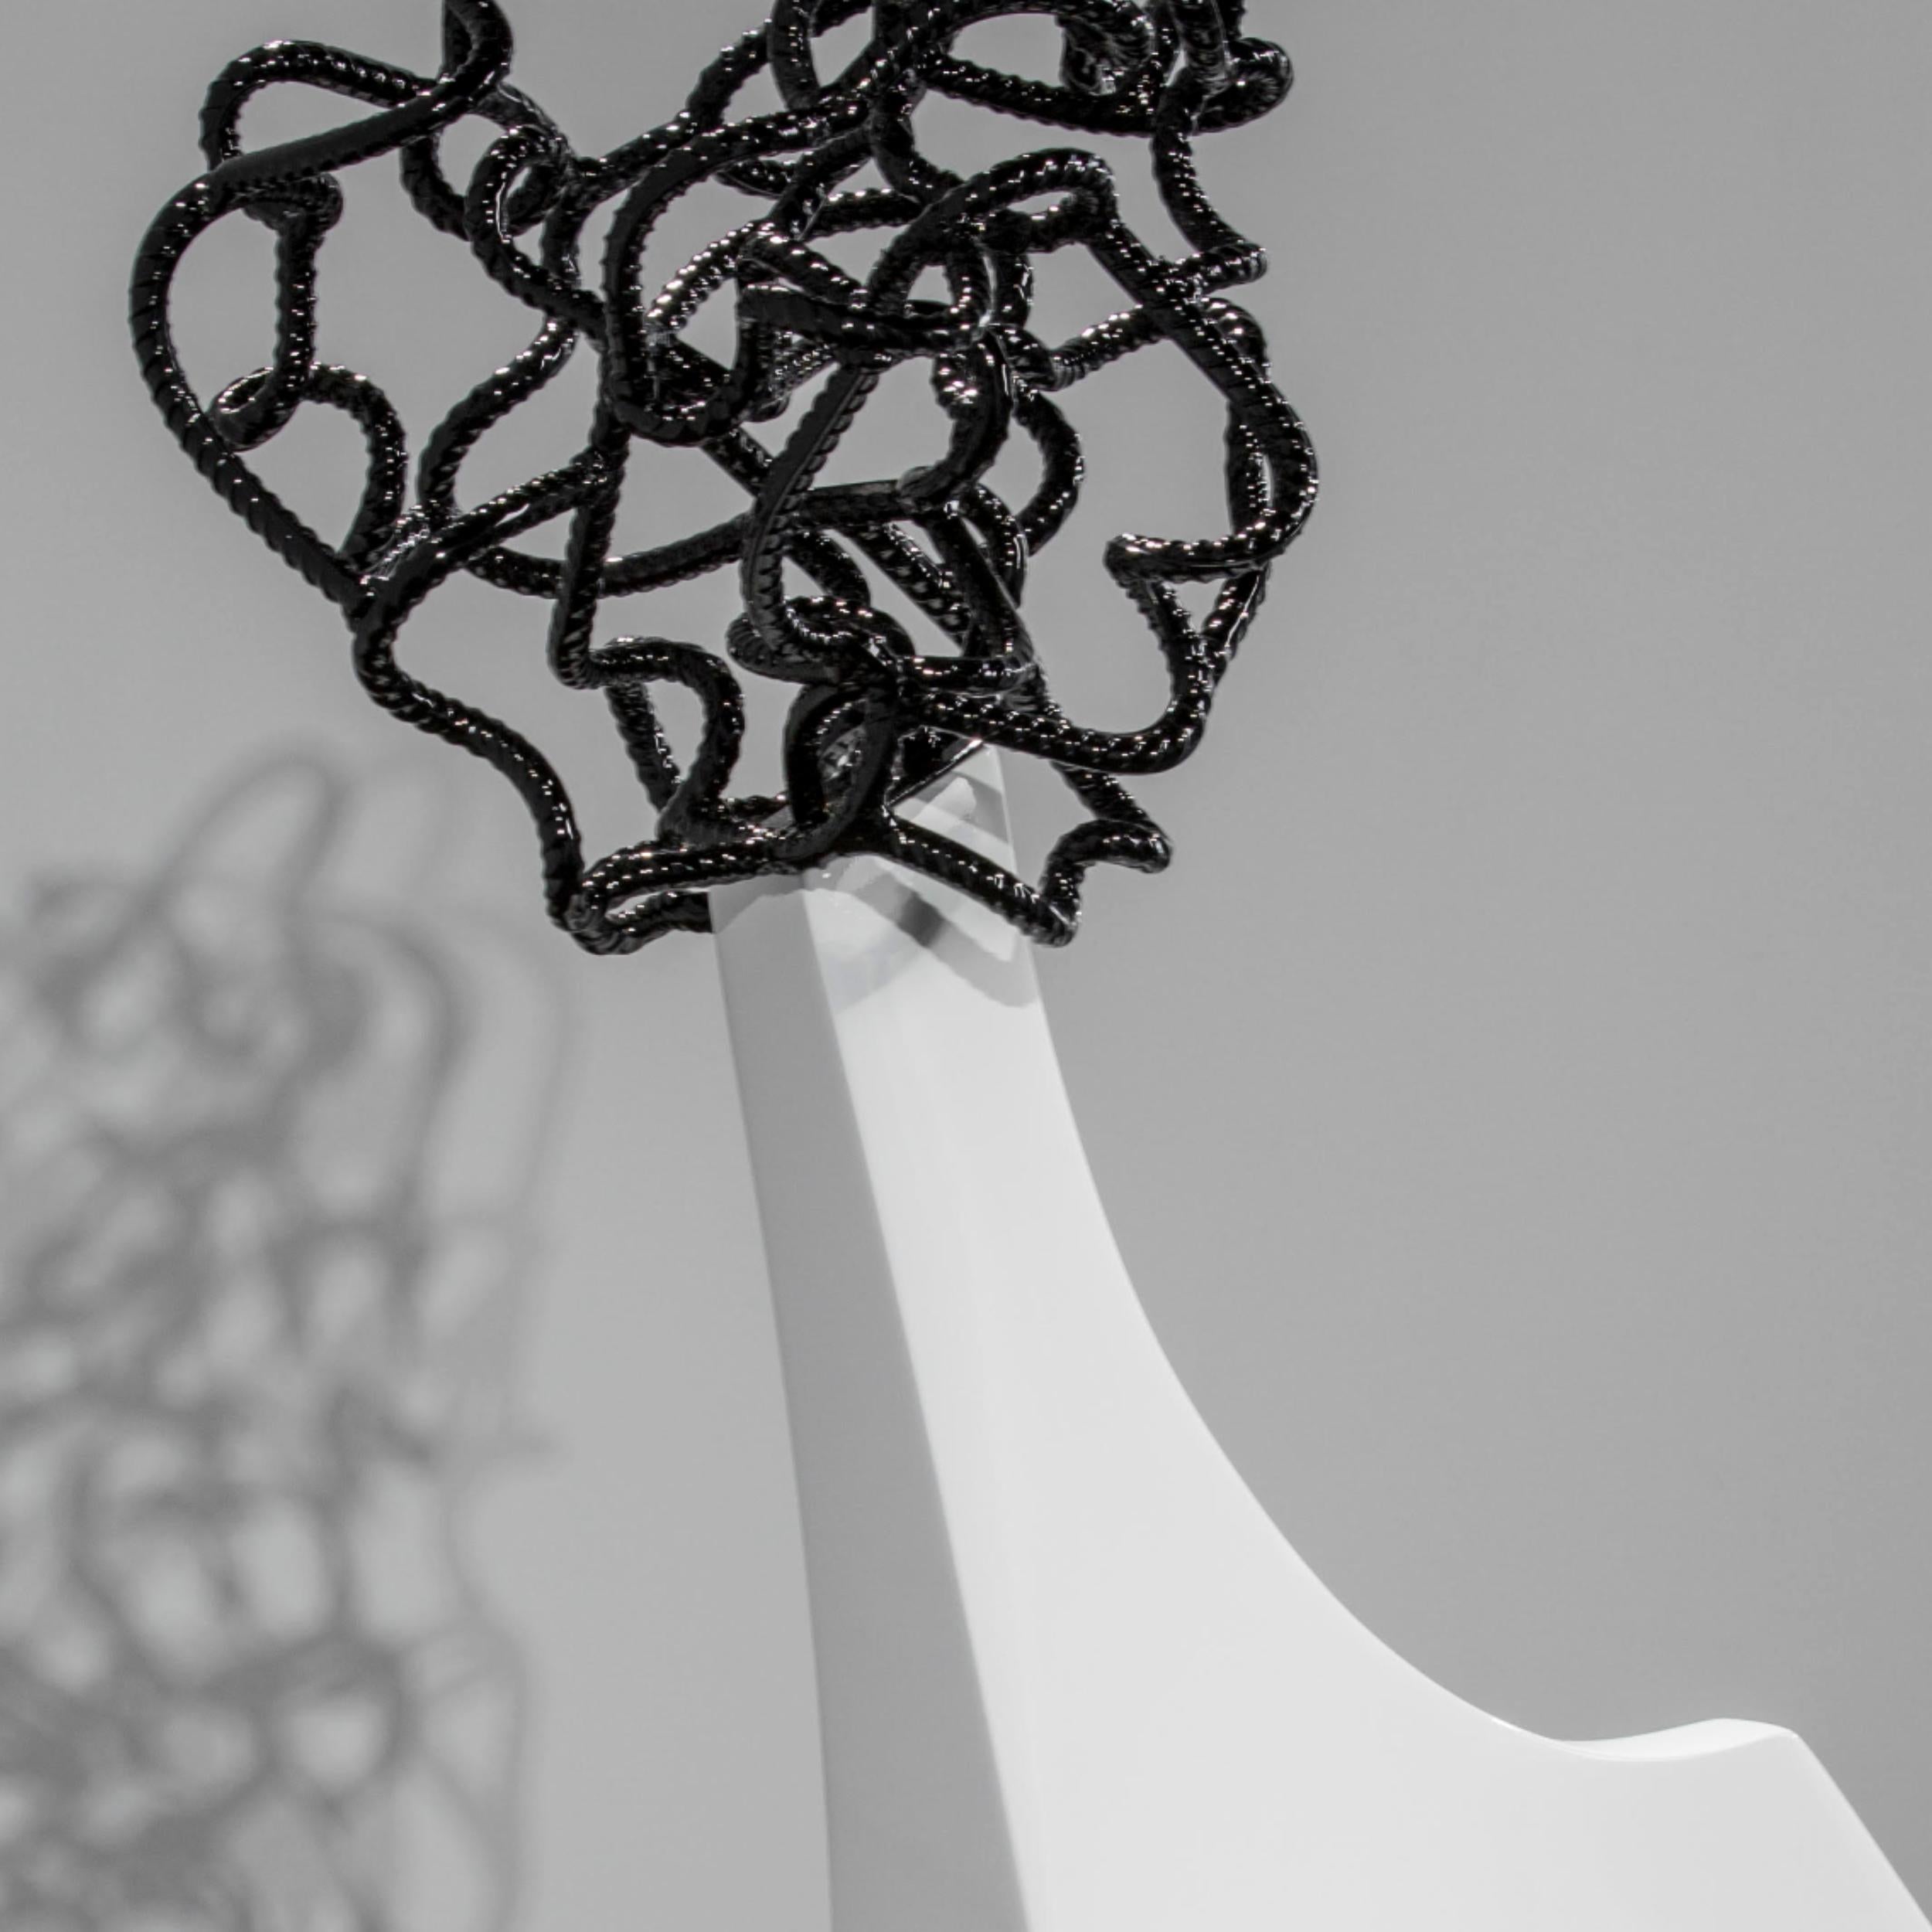 SIGNALS - Abstract Sculpture by Morgan Robinson